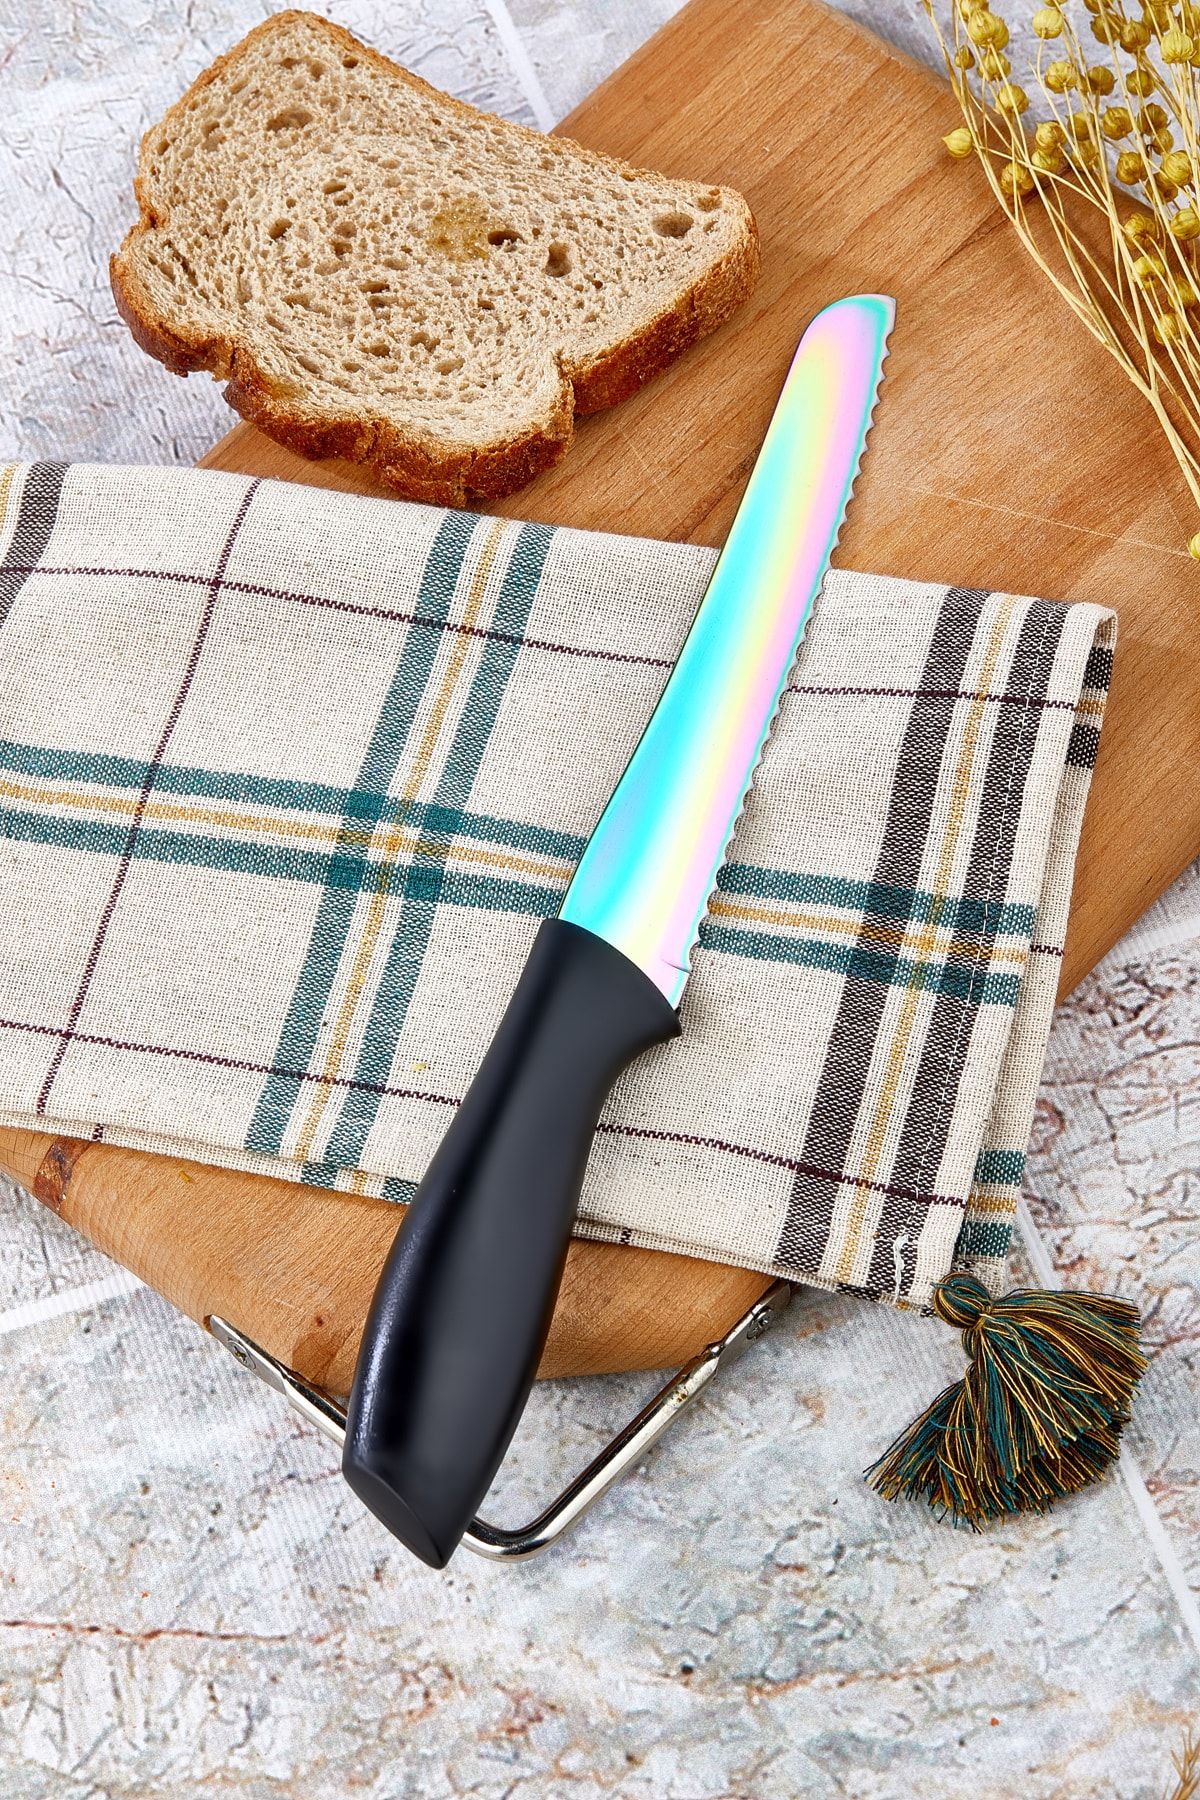 Cooker Lüx Bread Knife 34 Cm Titanyum Çelik Ekmek Bıçağı